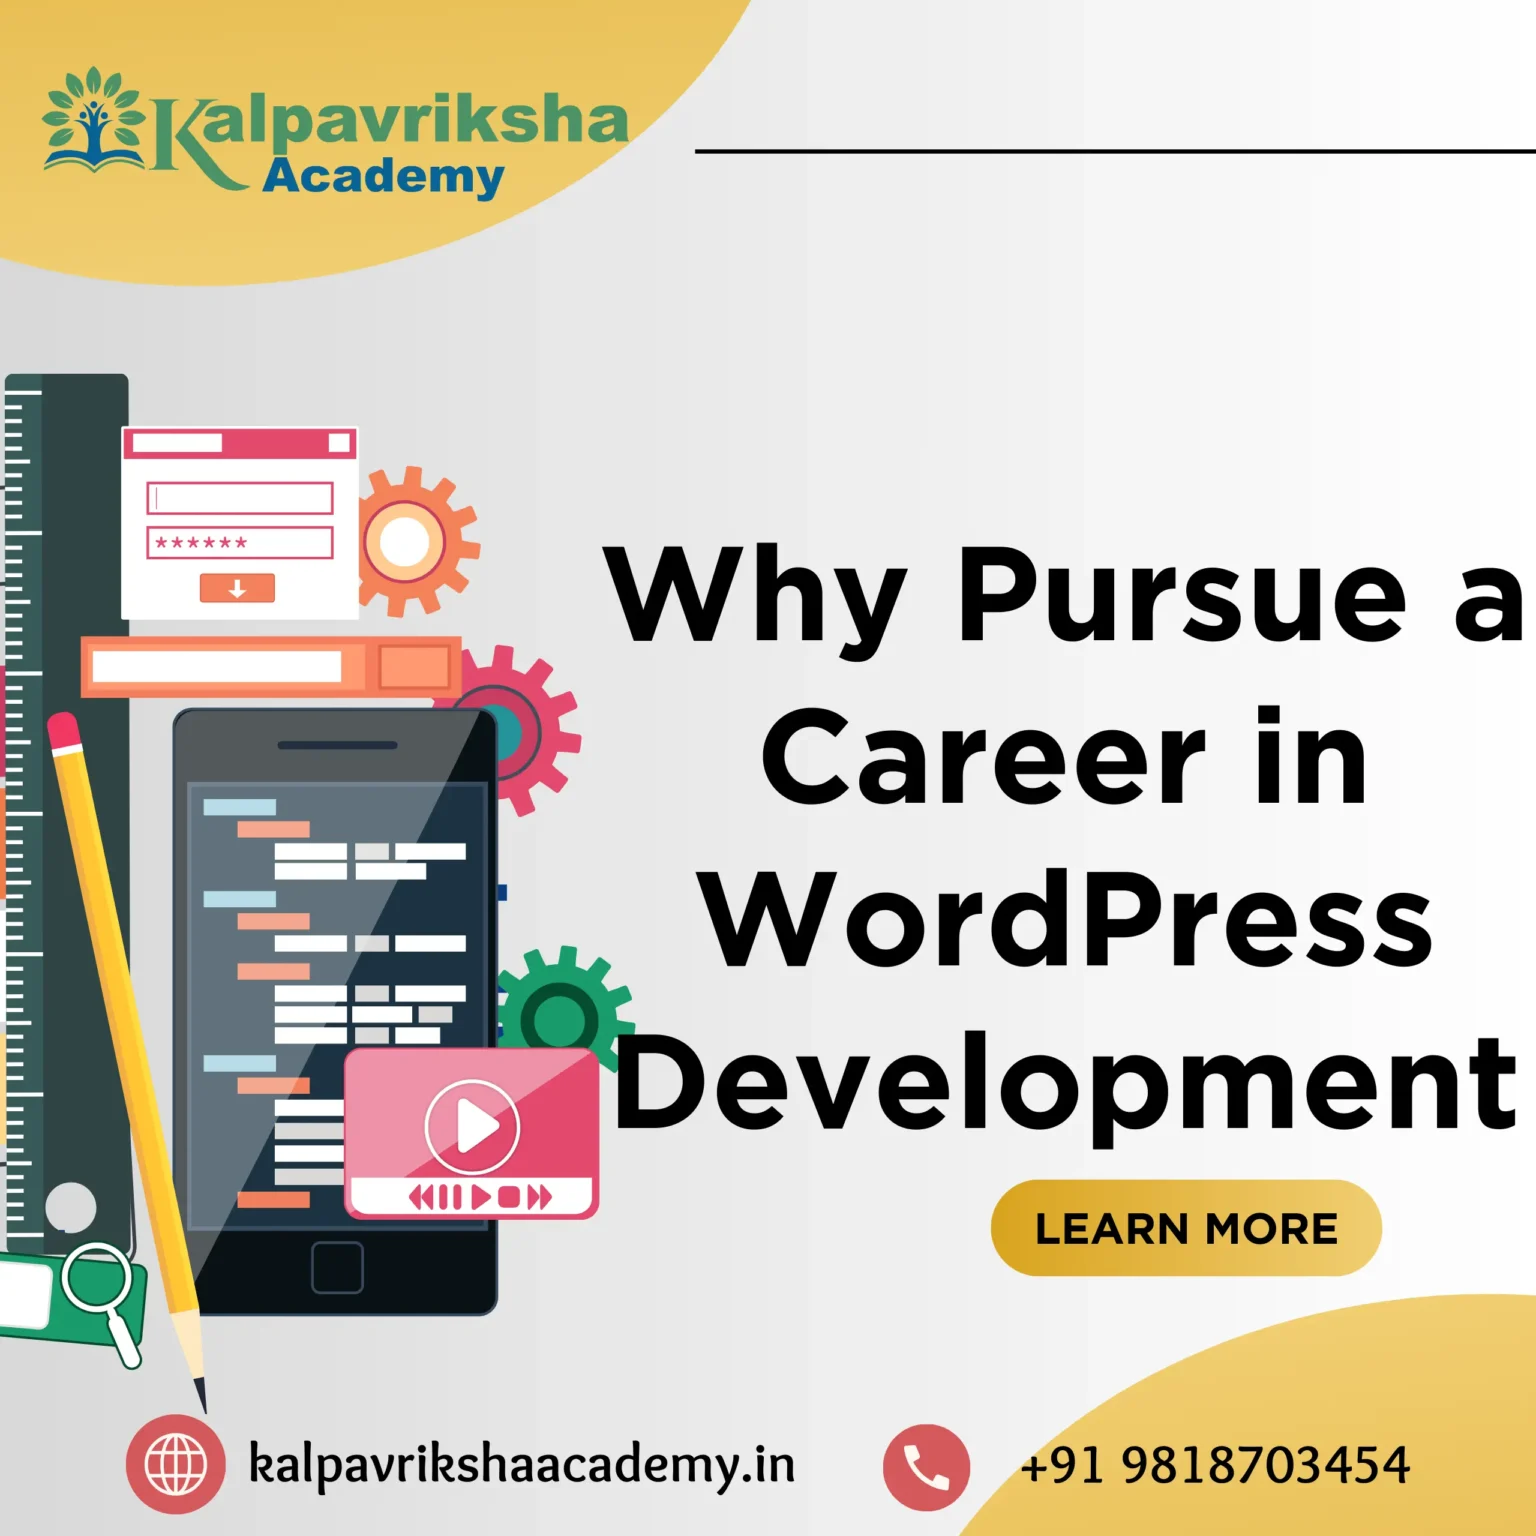 Pursue a Career in WordPress Development